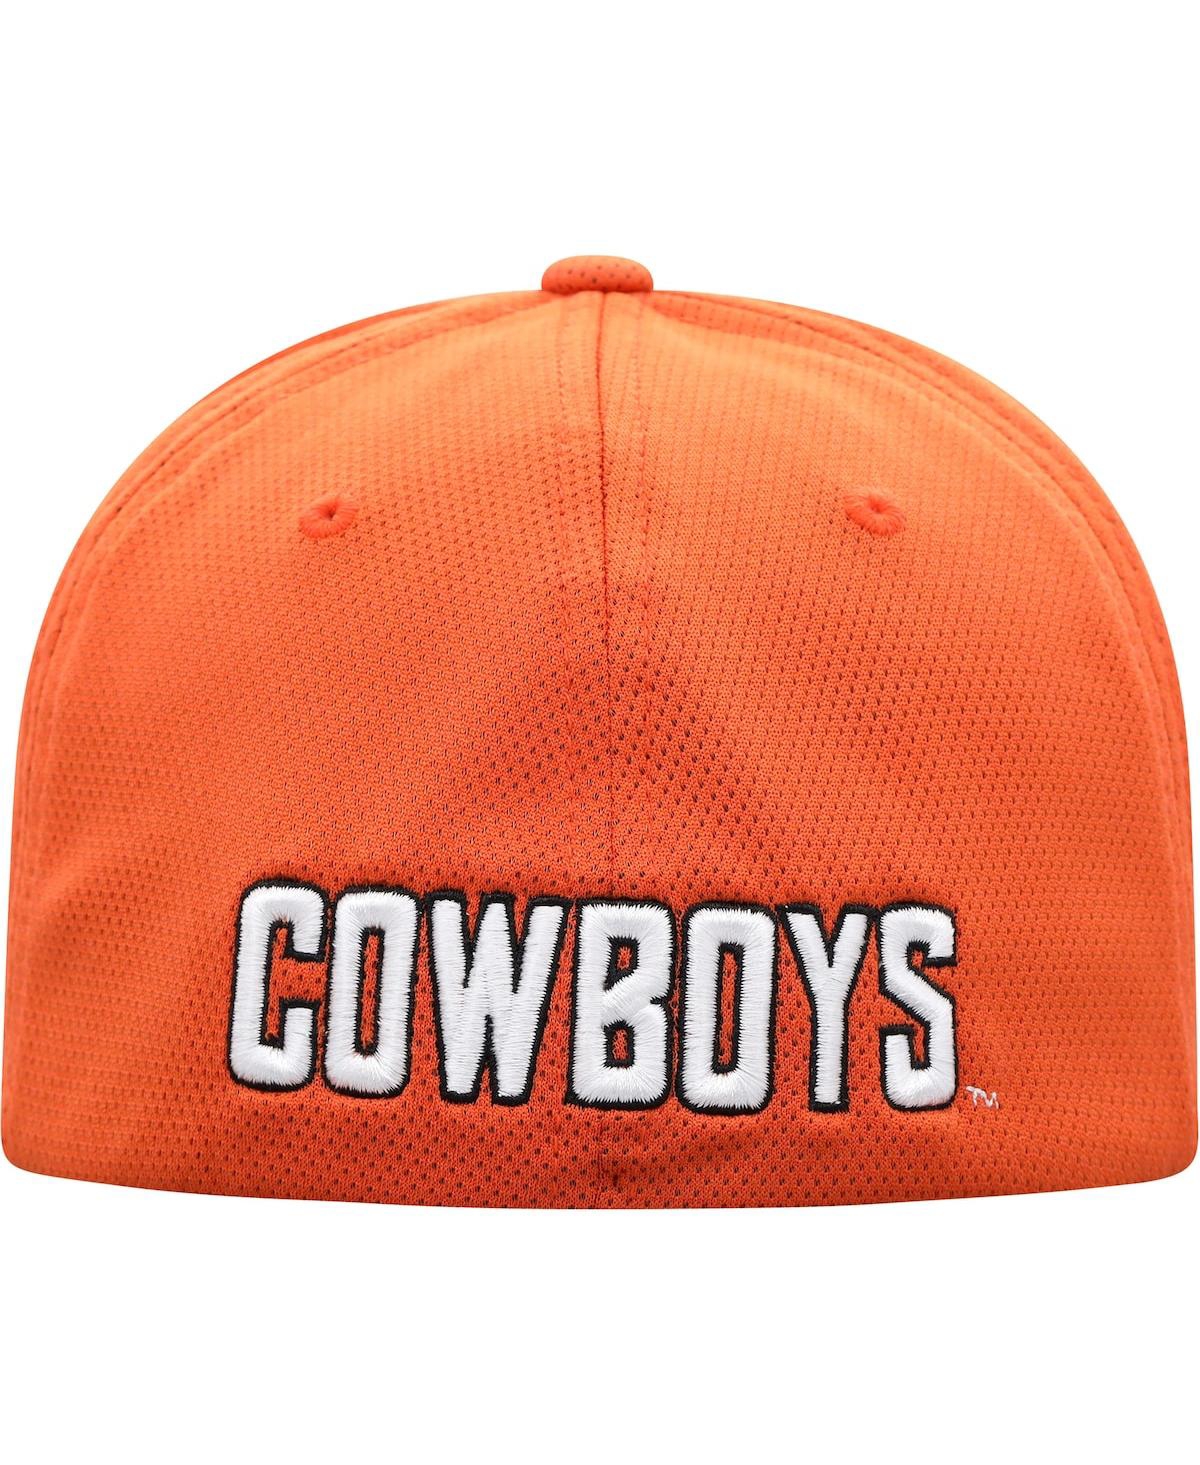 Shop Top Of The World Men's  Orange Oklahoma State Cowboys Reflex Logo Flex Hat